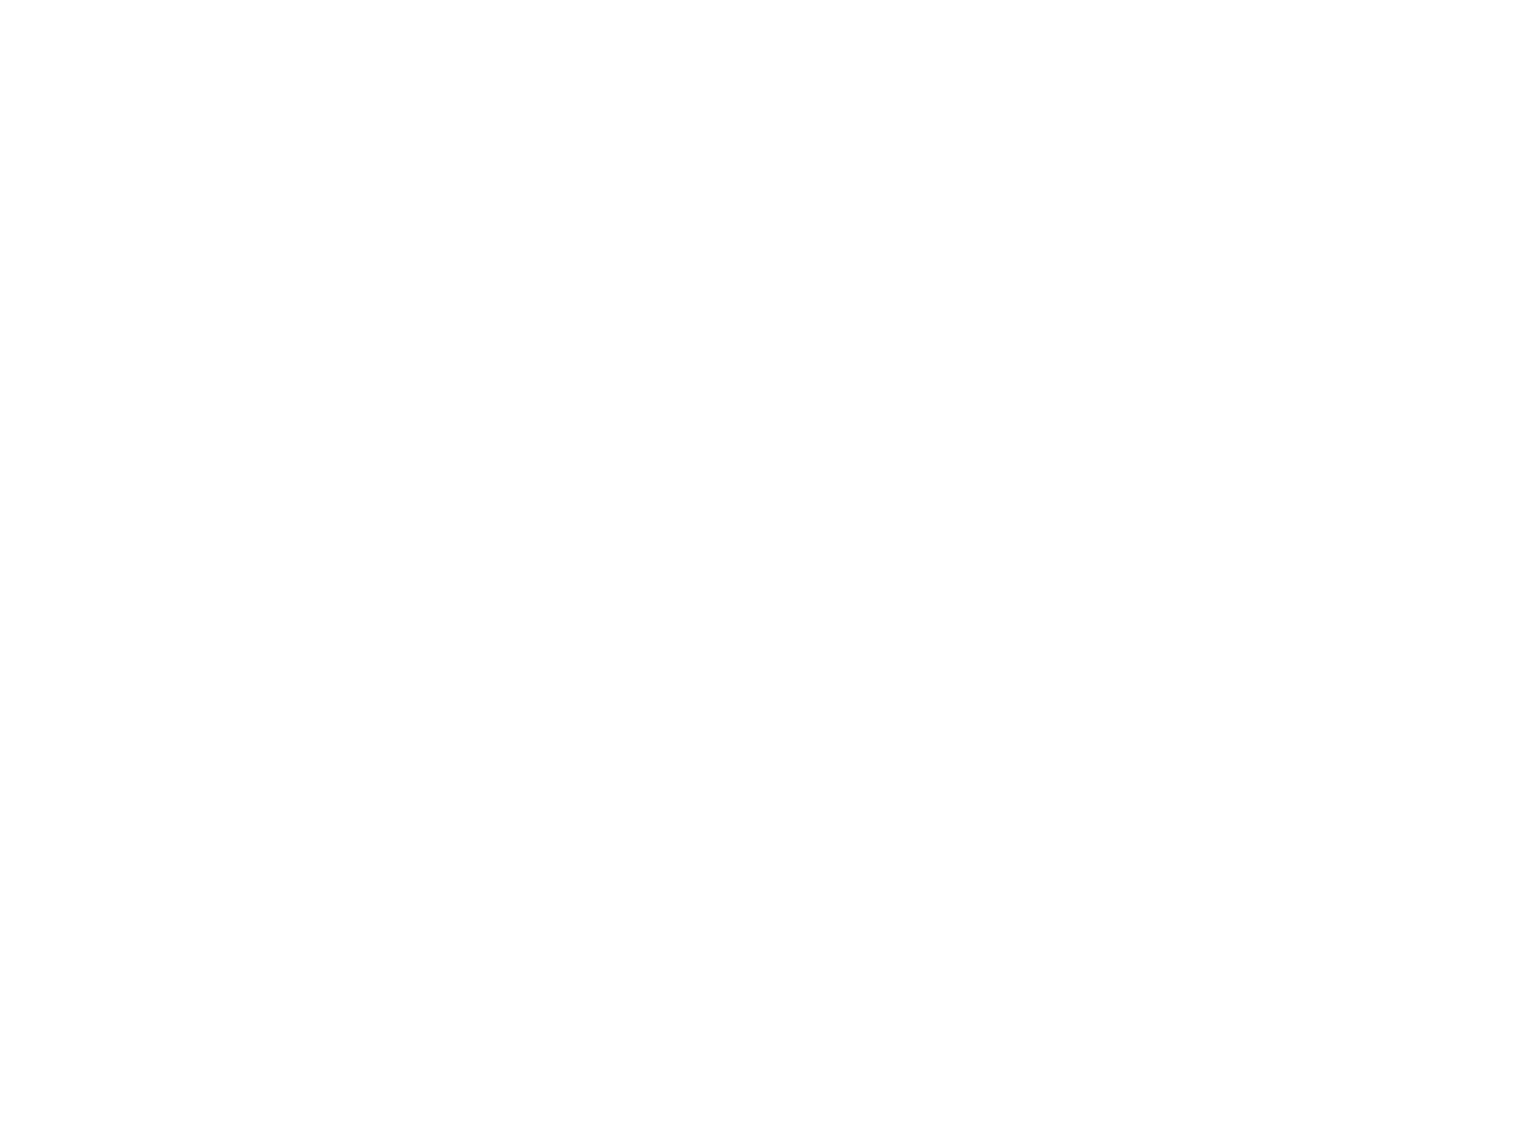 lightbulb with dollar sign